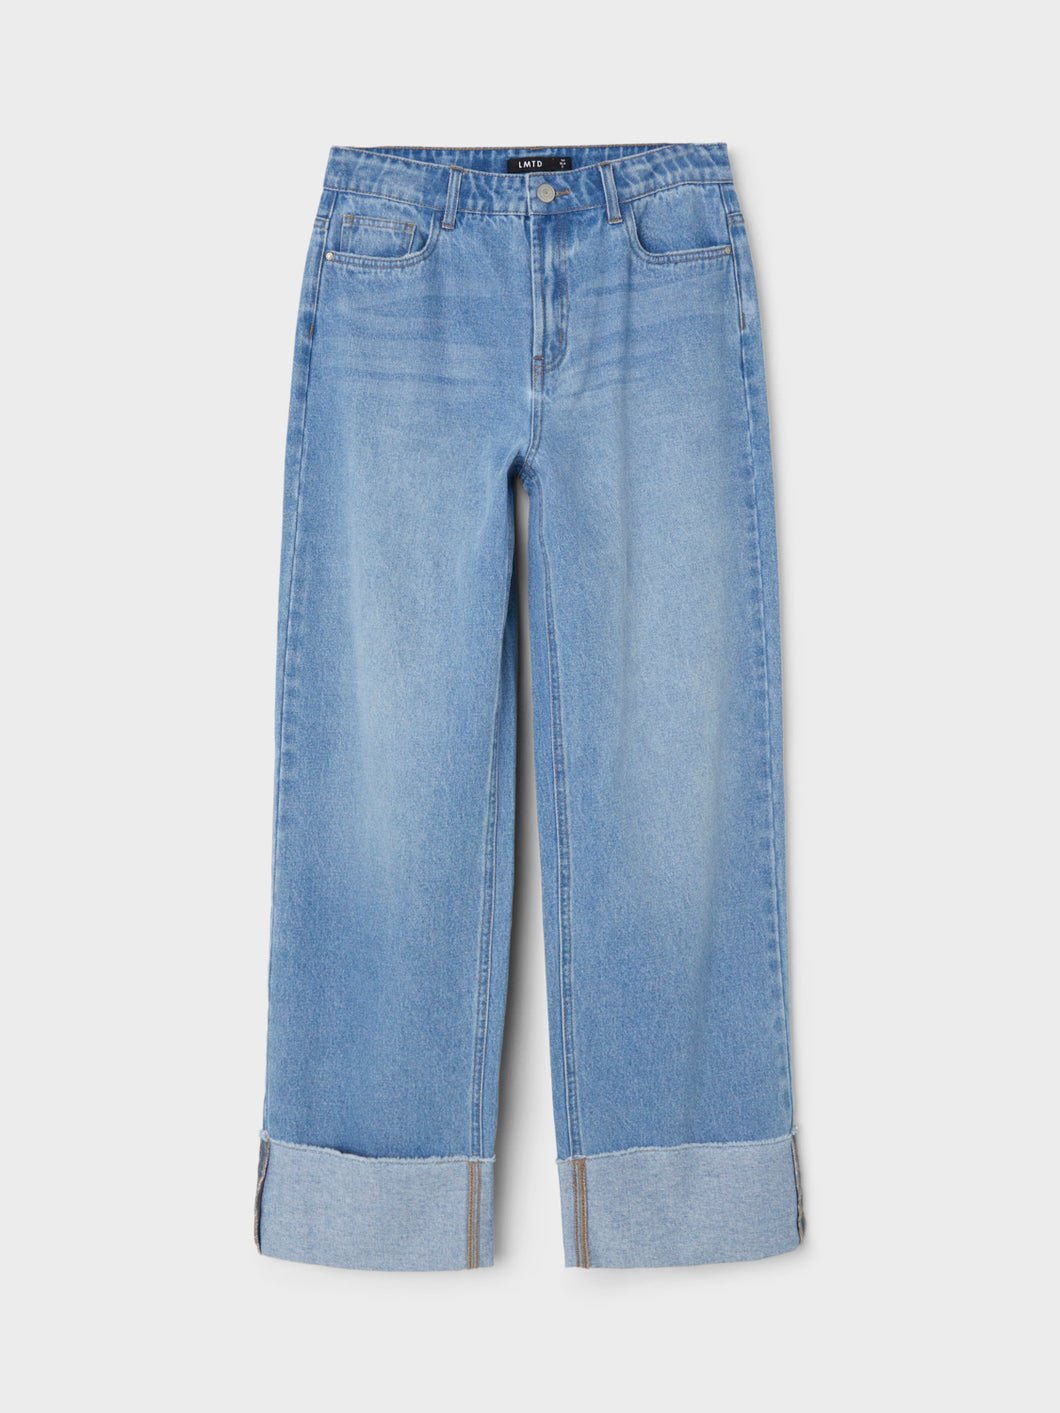 NLFIZZA Jeans - Light Blue Denim